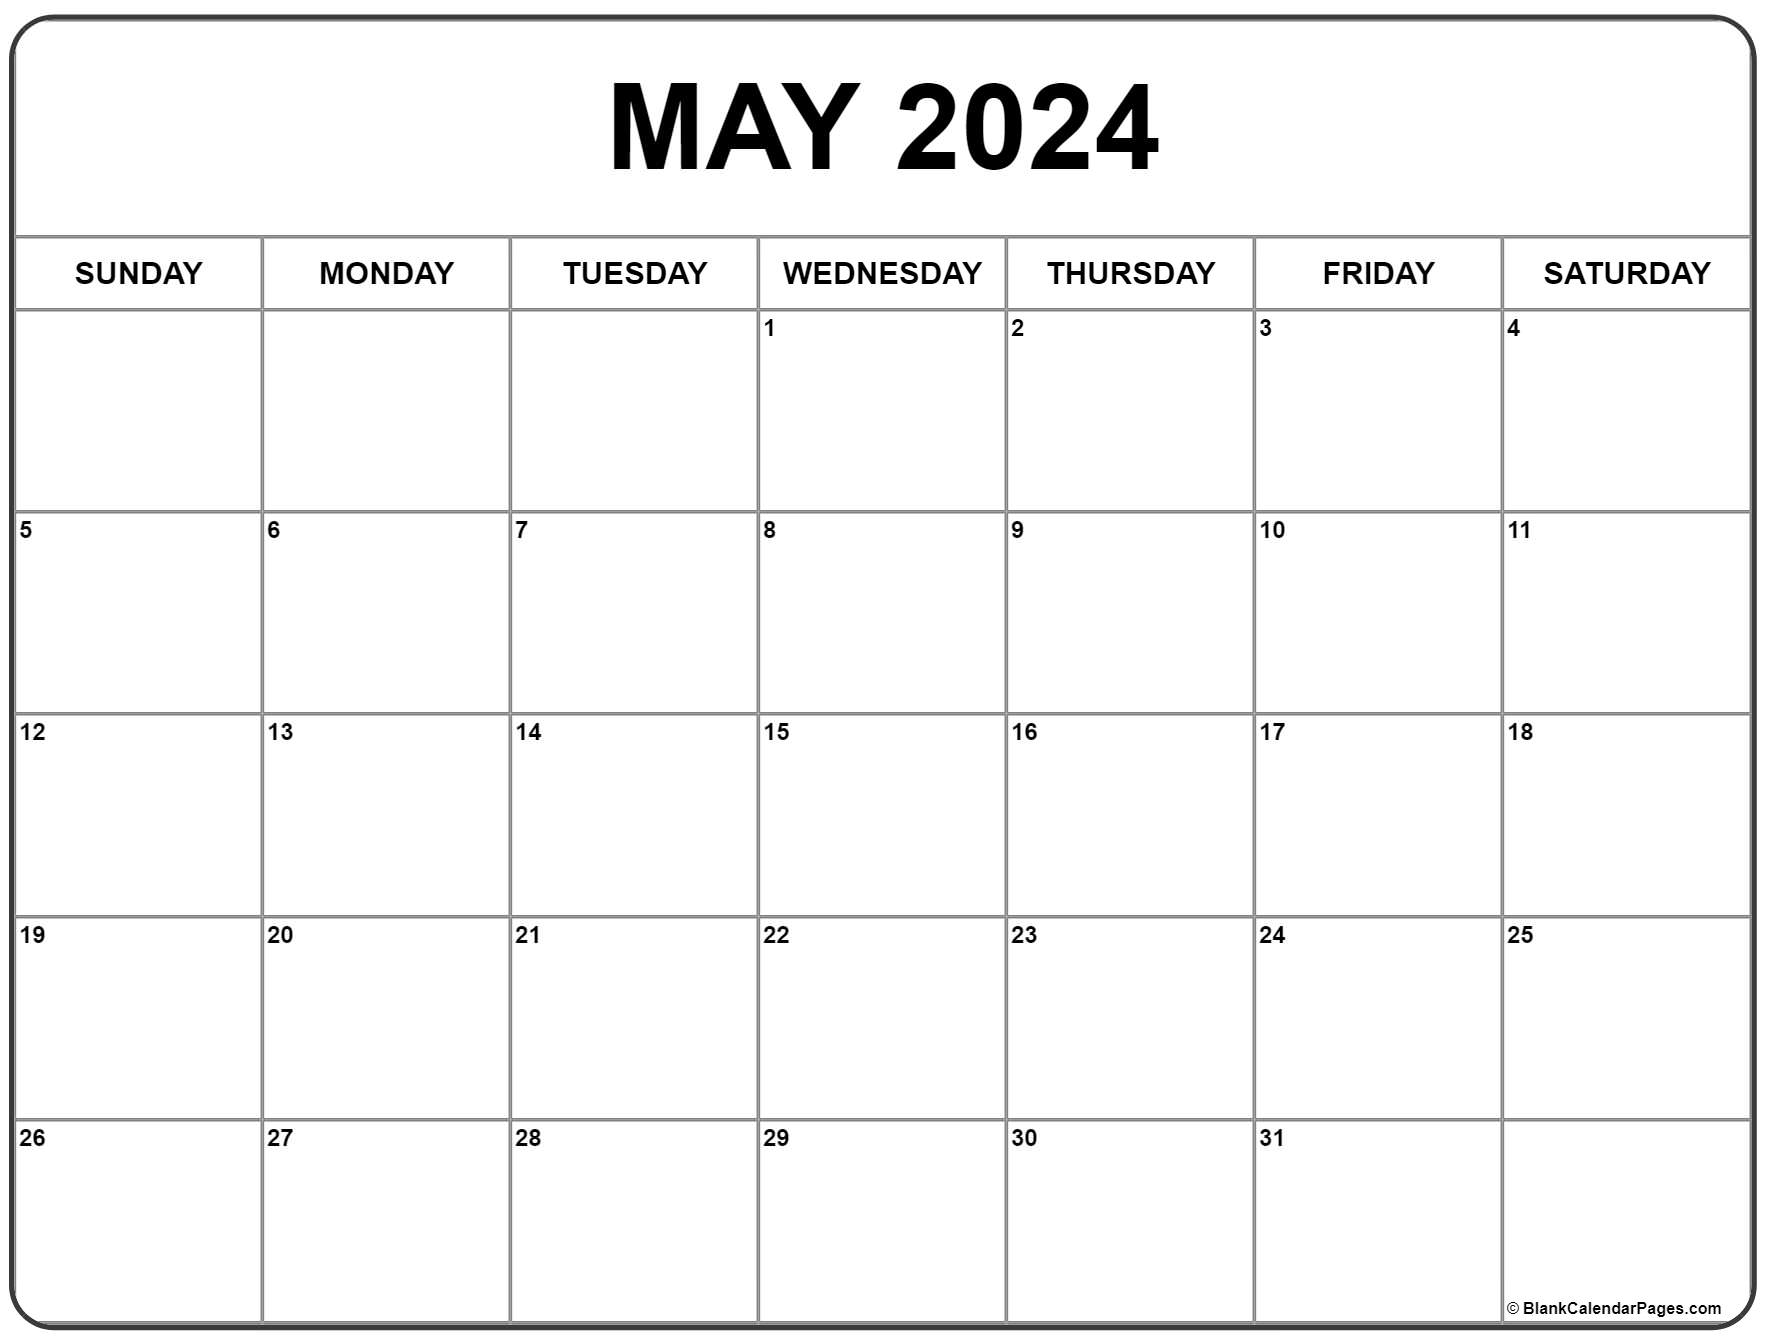 May 2024 Calendar | Free Printable Calendar for Printable Month Calendar May 2024